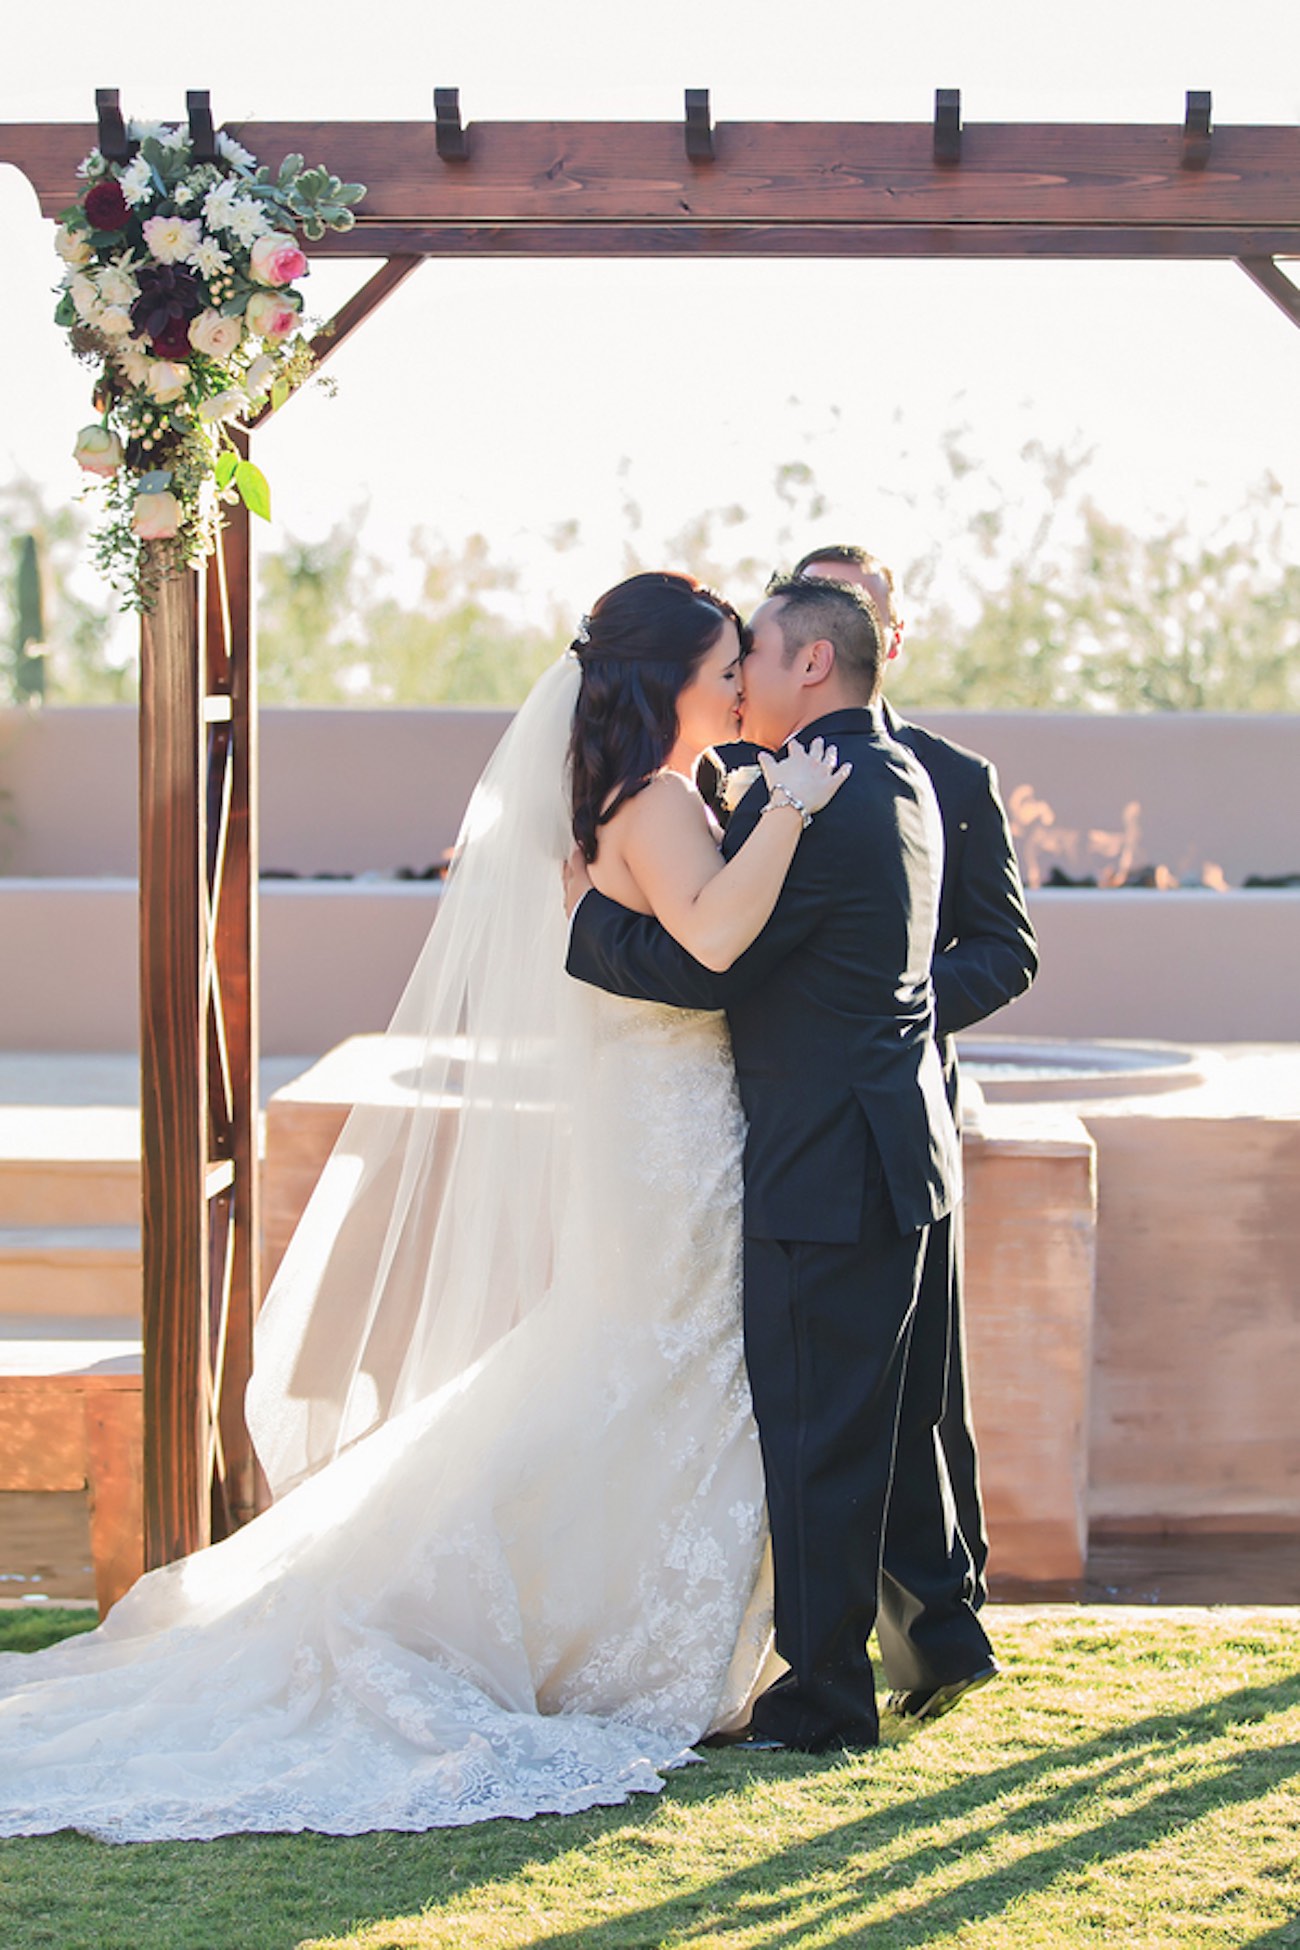 Plum Pink + Gold Arizona Wedding - Jessica Q Photography